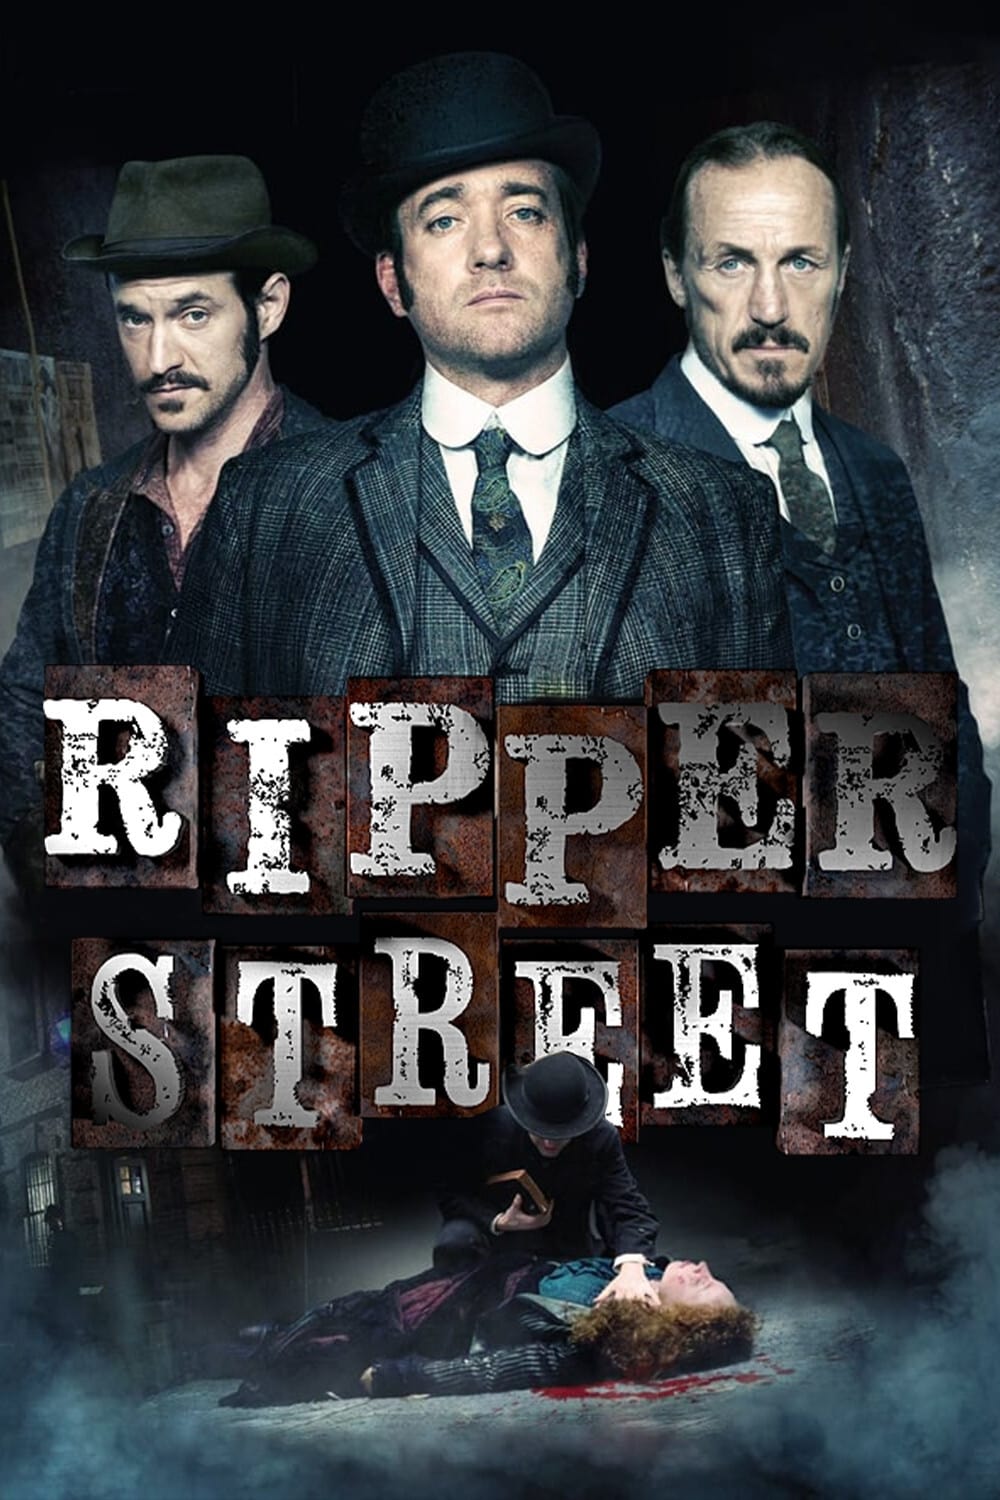 Ripper Street poster